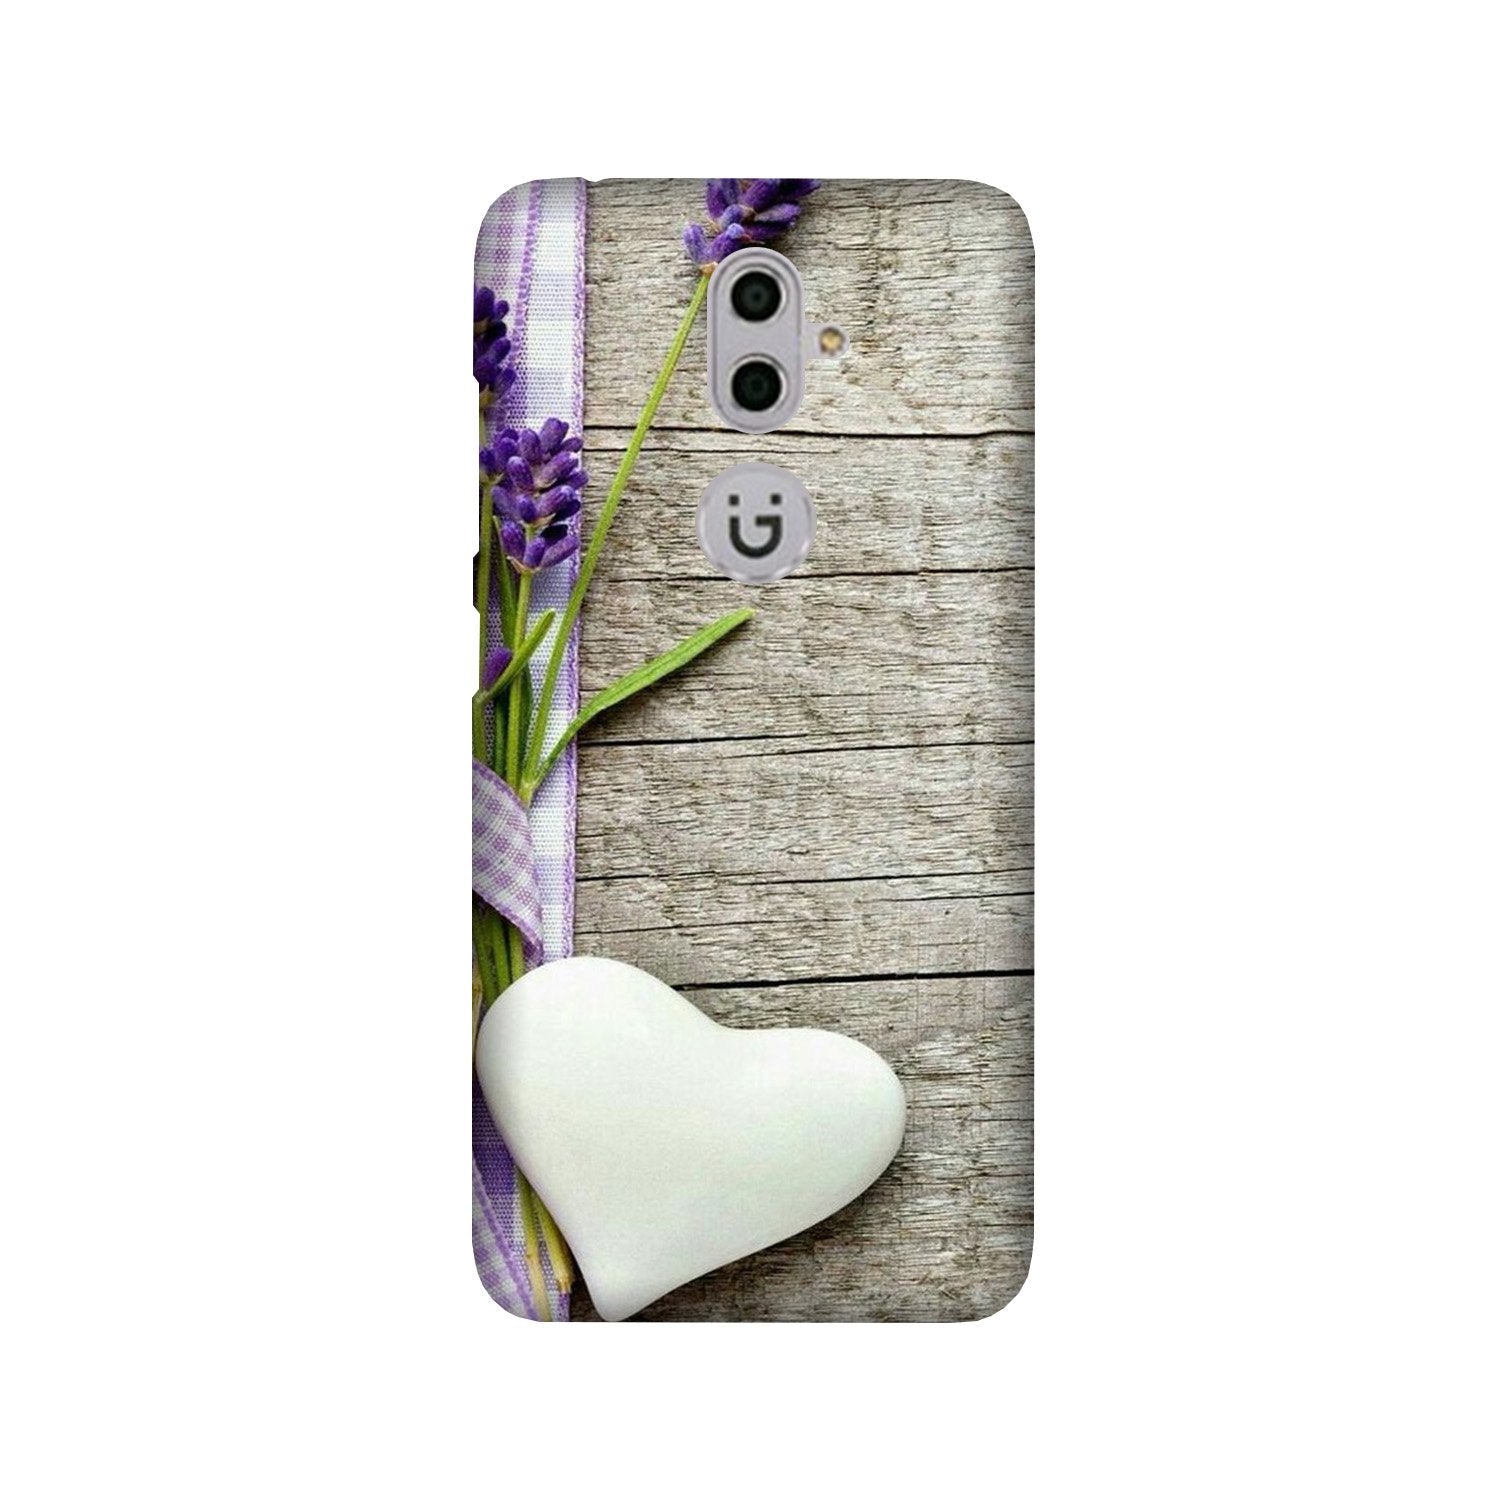 White Heart Case for Gionee S9 (Design No. 298)